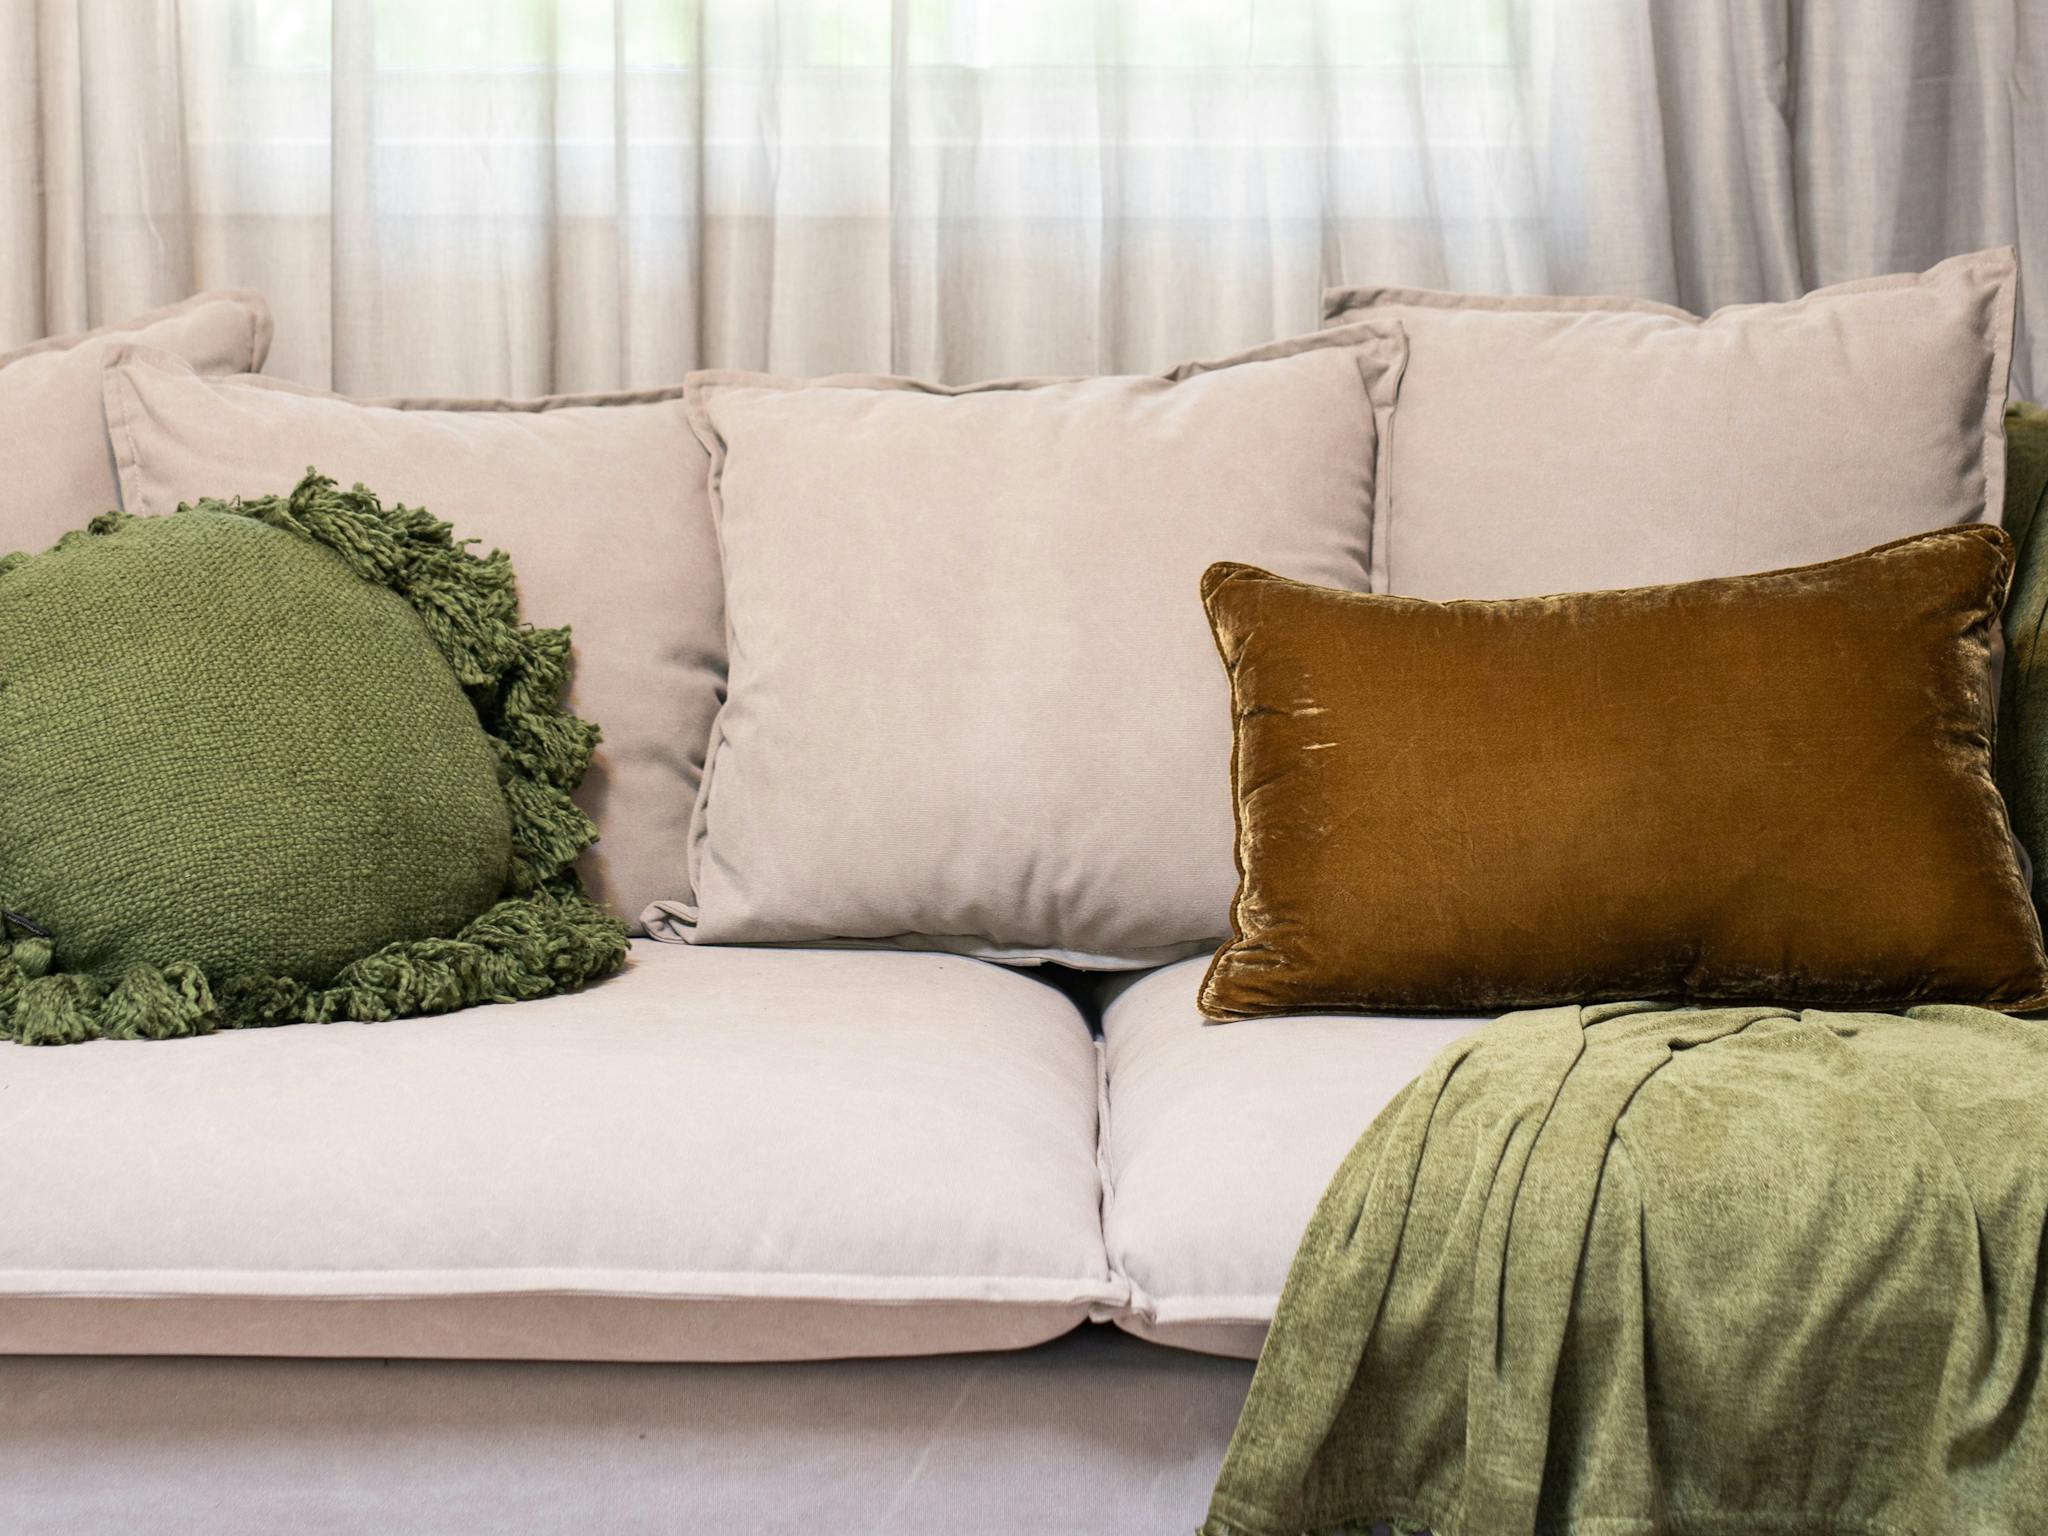 Sumptuous sofa, cushions, throw